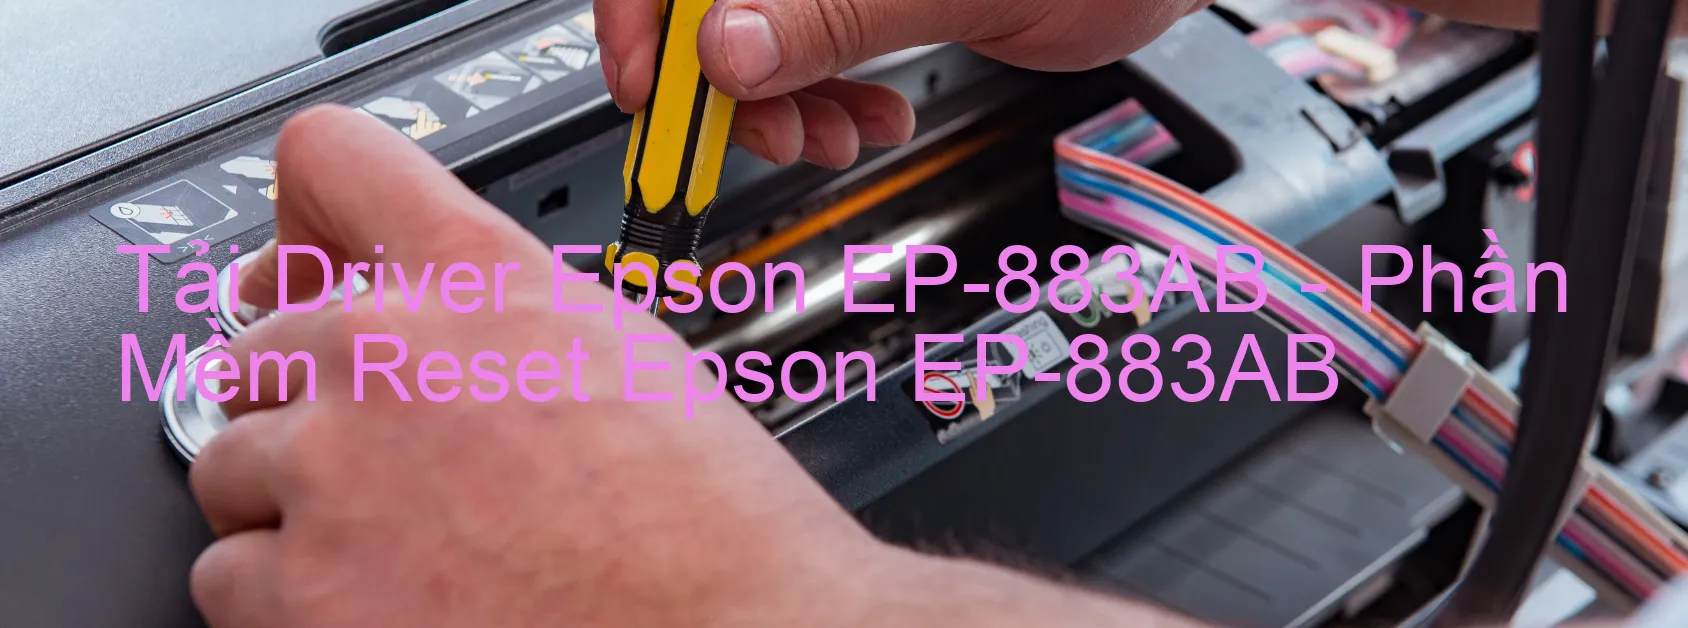 Driver Epson EP-883AB, Phần Mềm Reset Epson EP-883AB